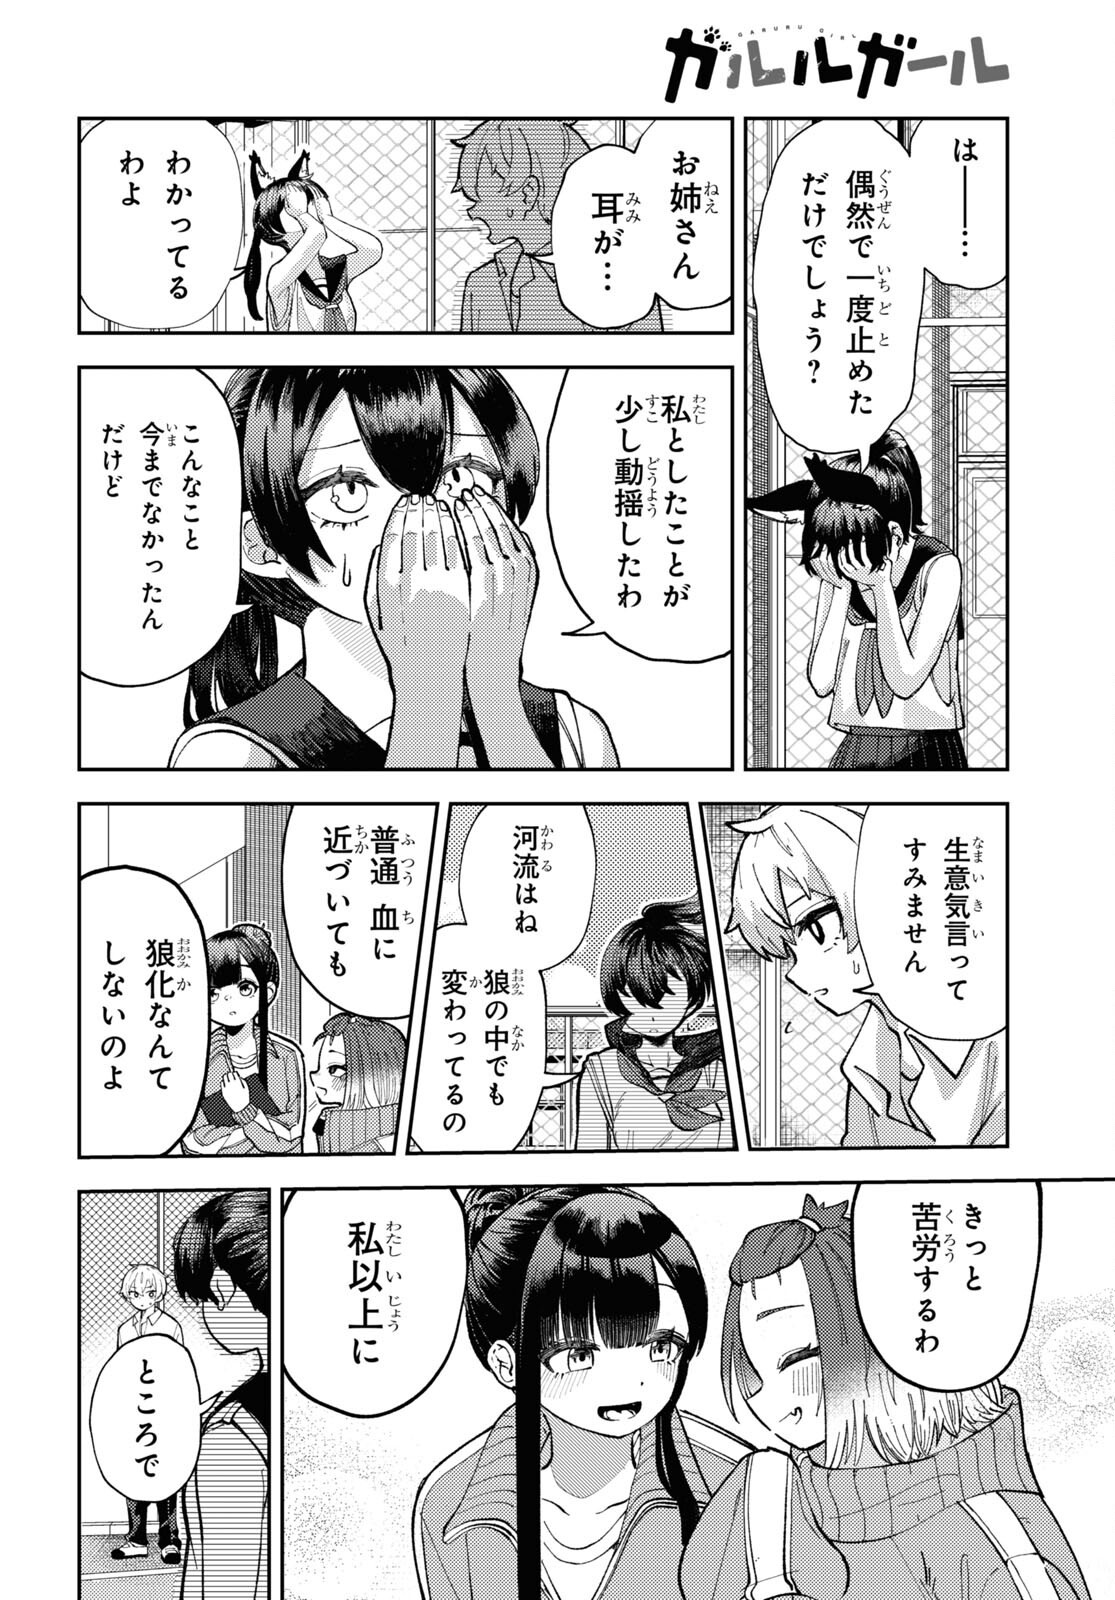 Garuru Girl - Chapter 3 - Page 16